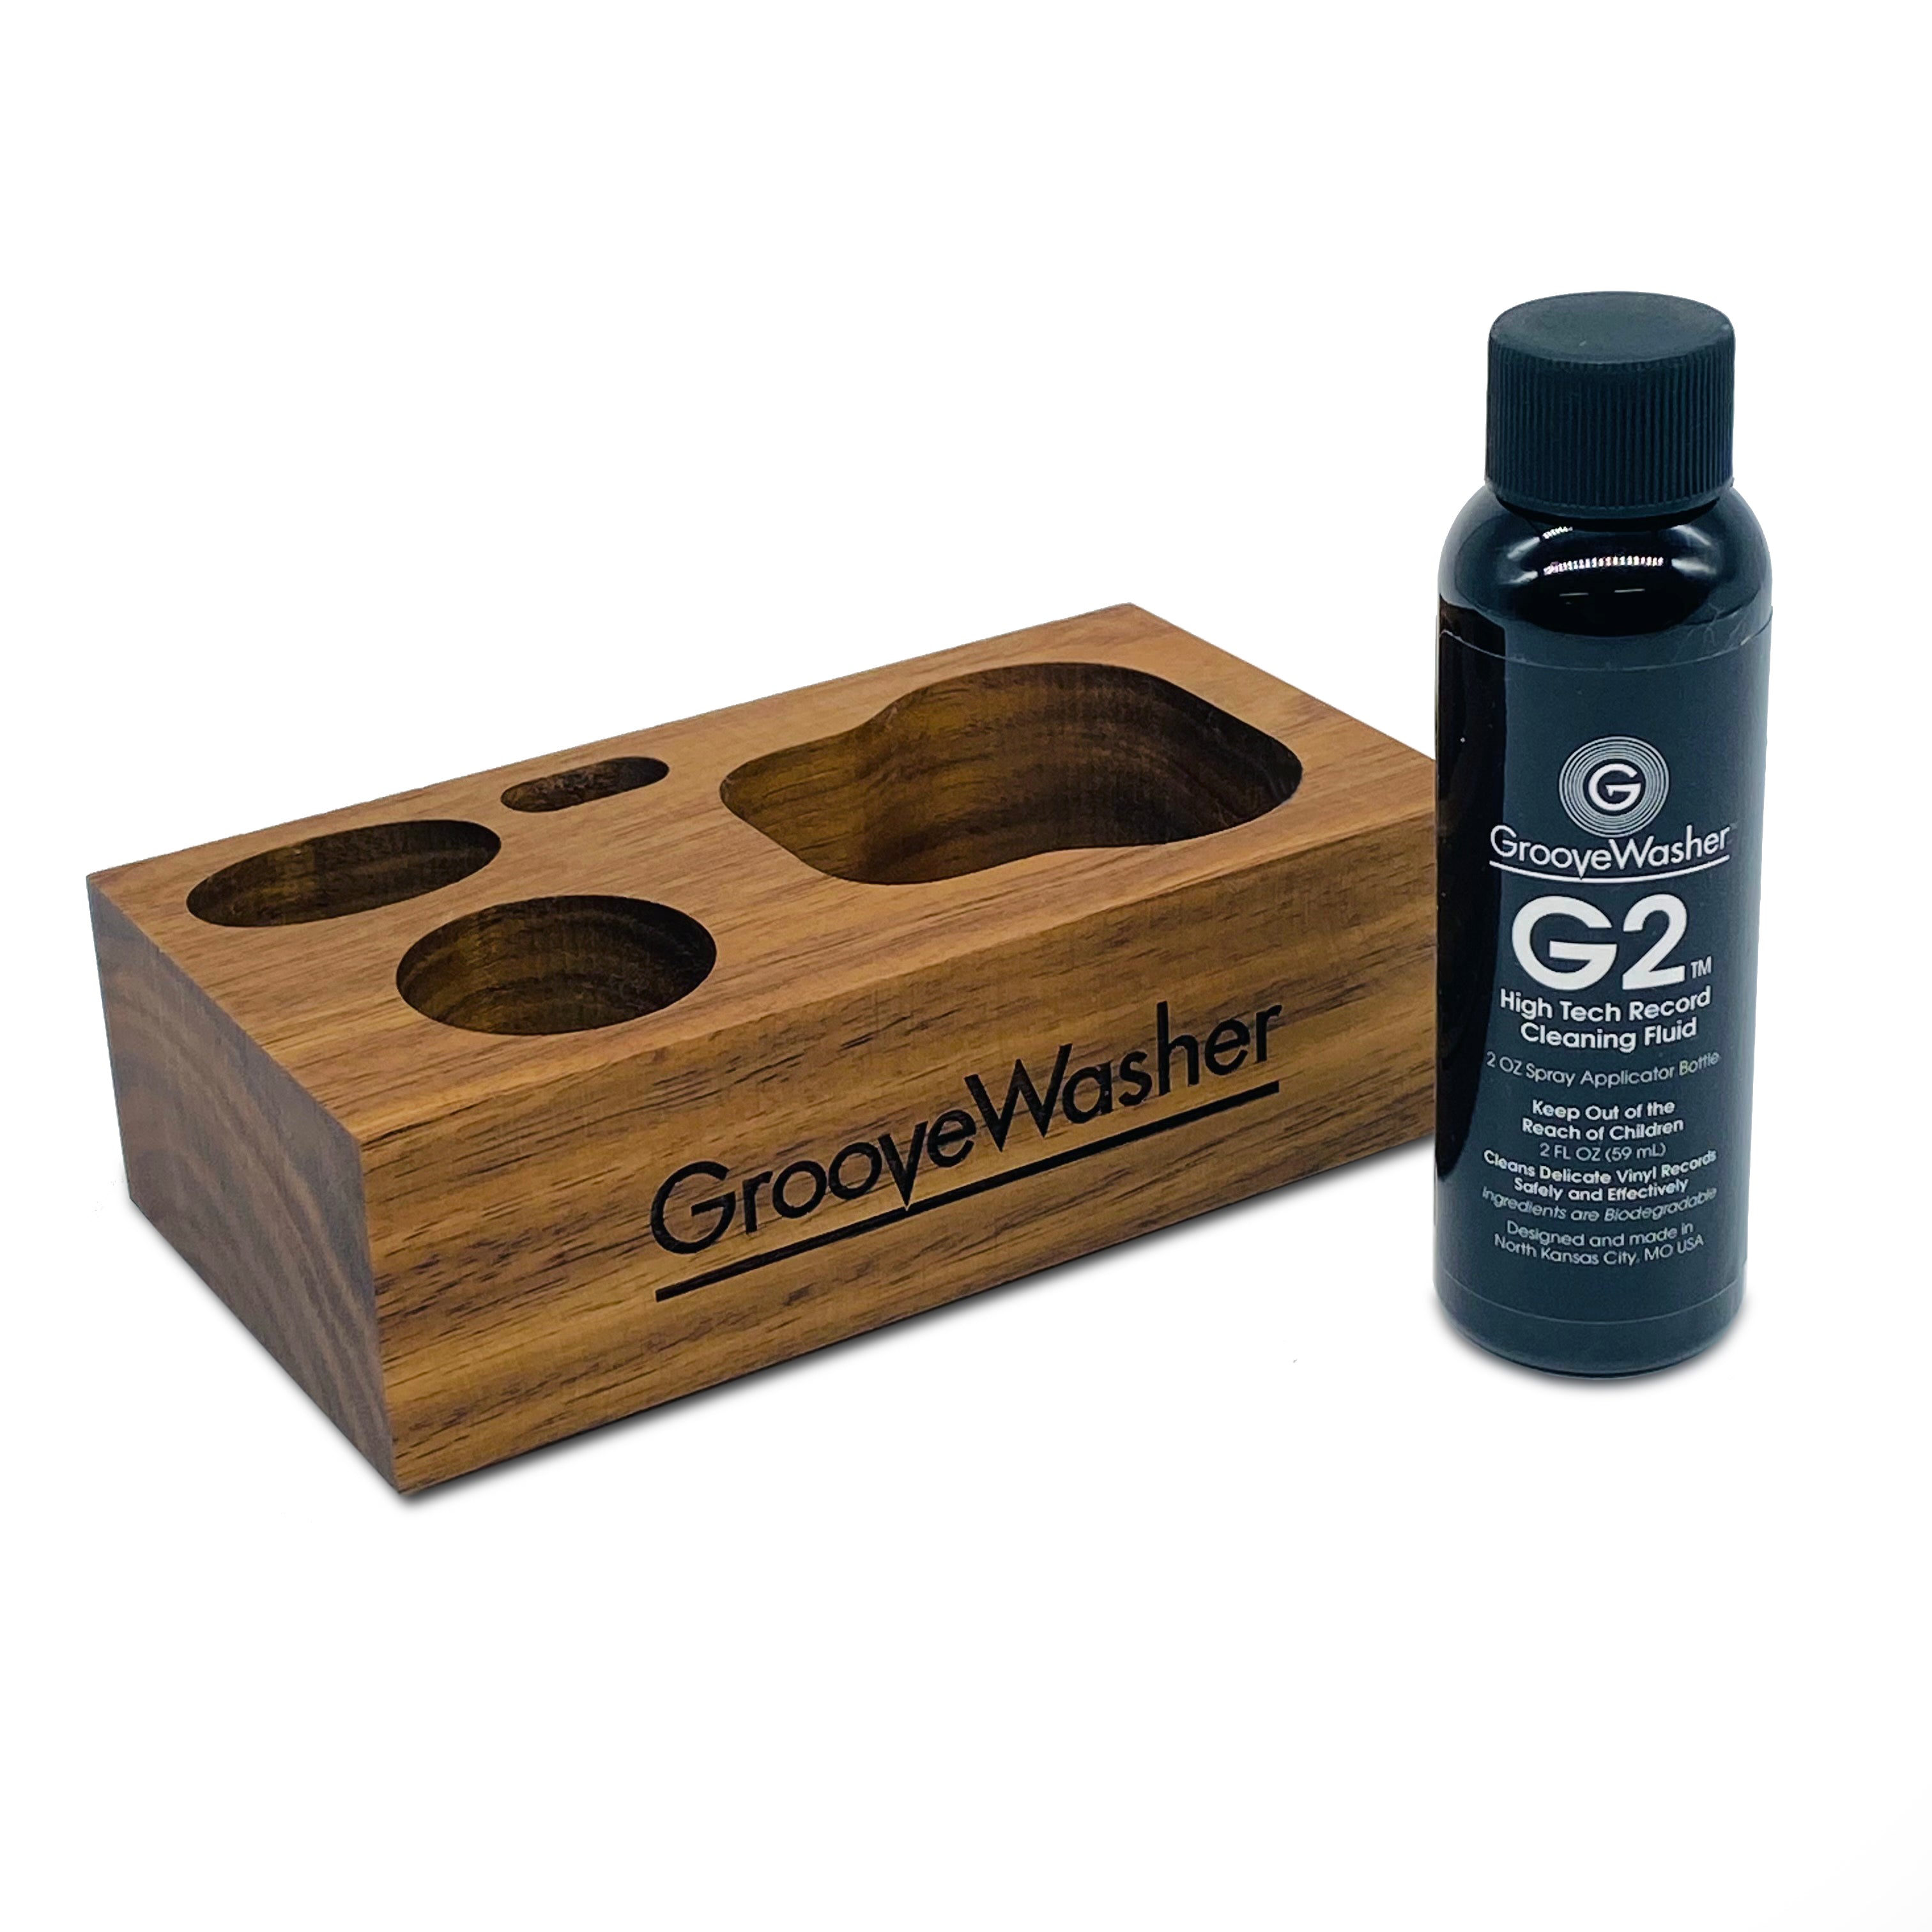 Groovewasher Walnut Kit de limpieza para Vinilo